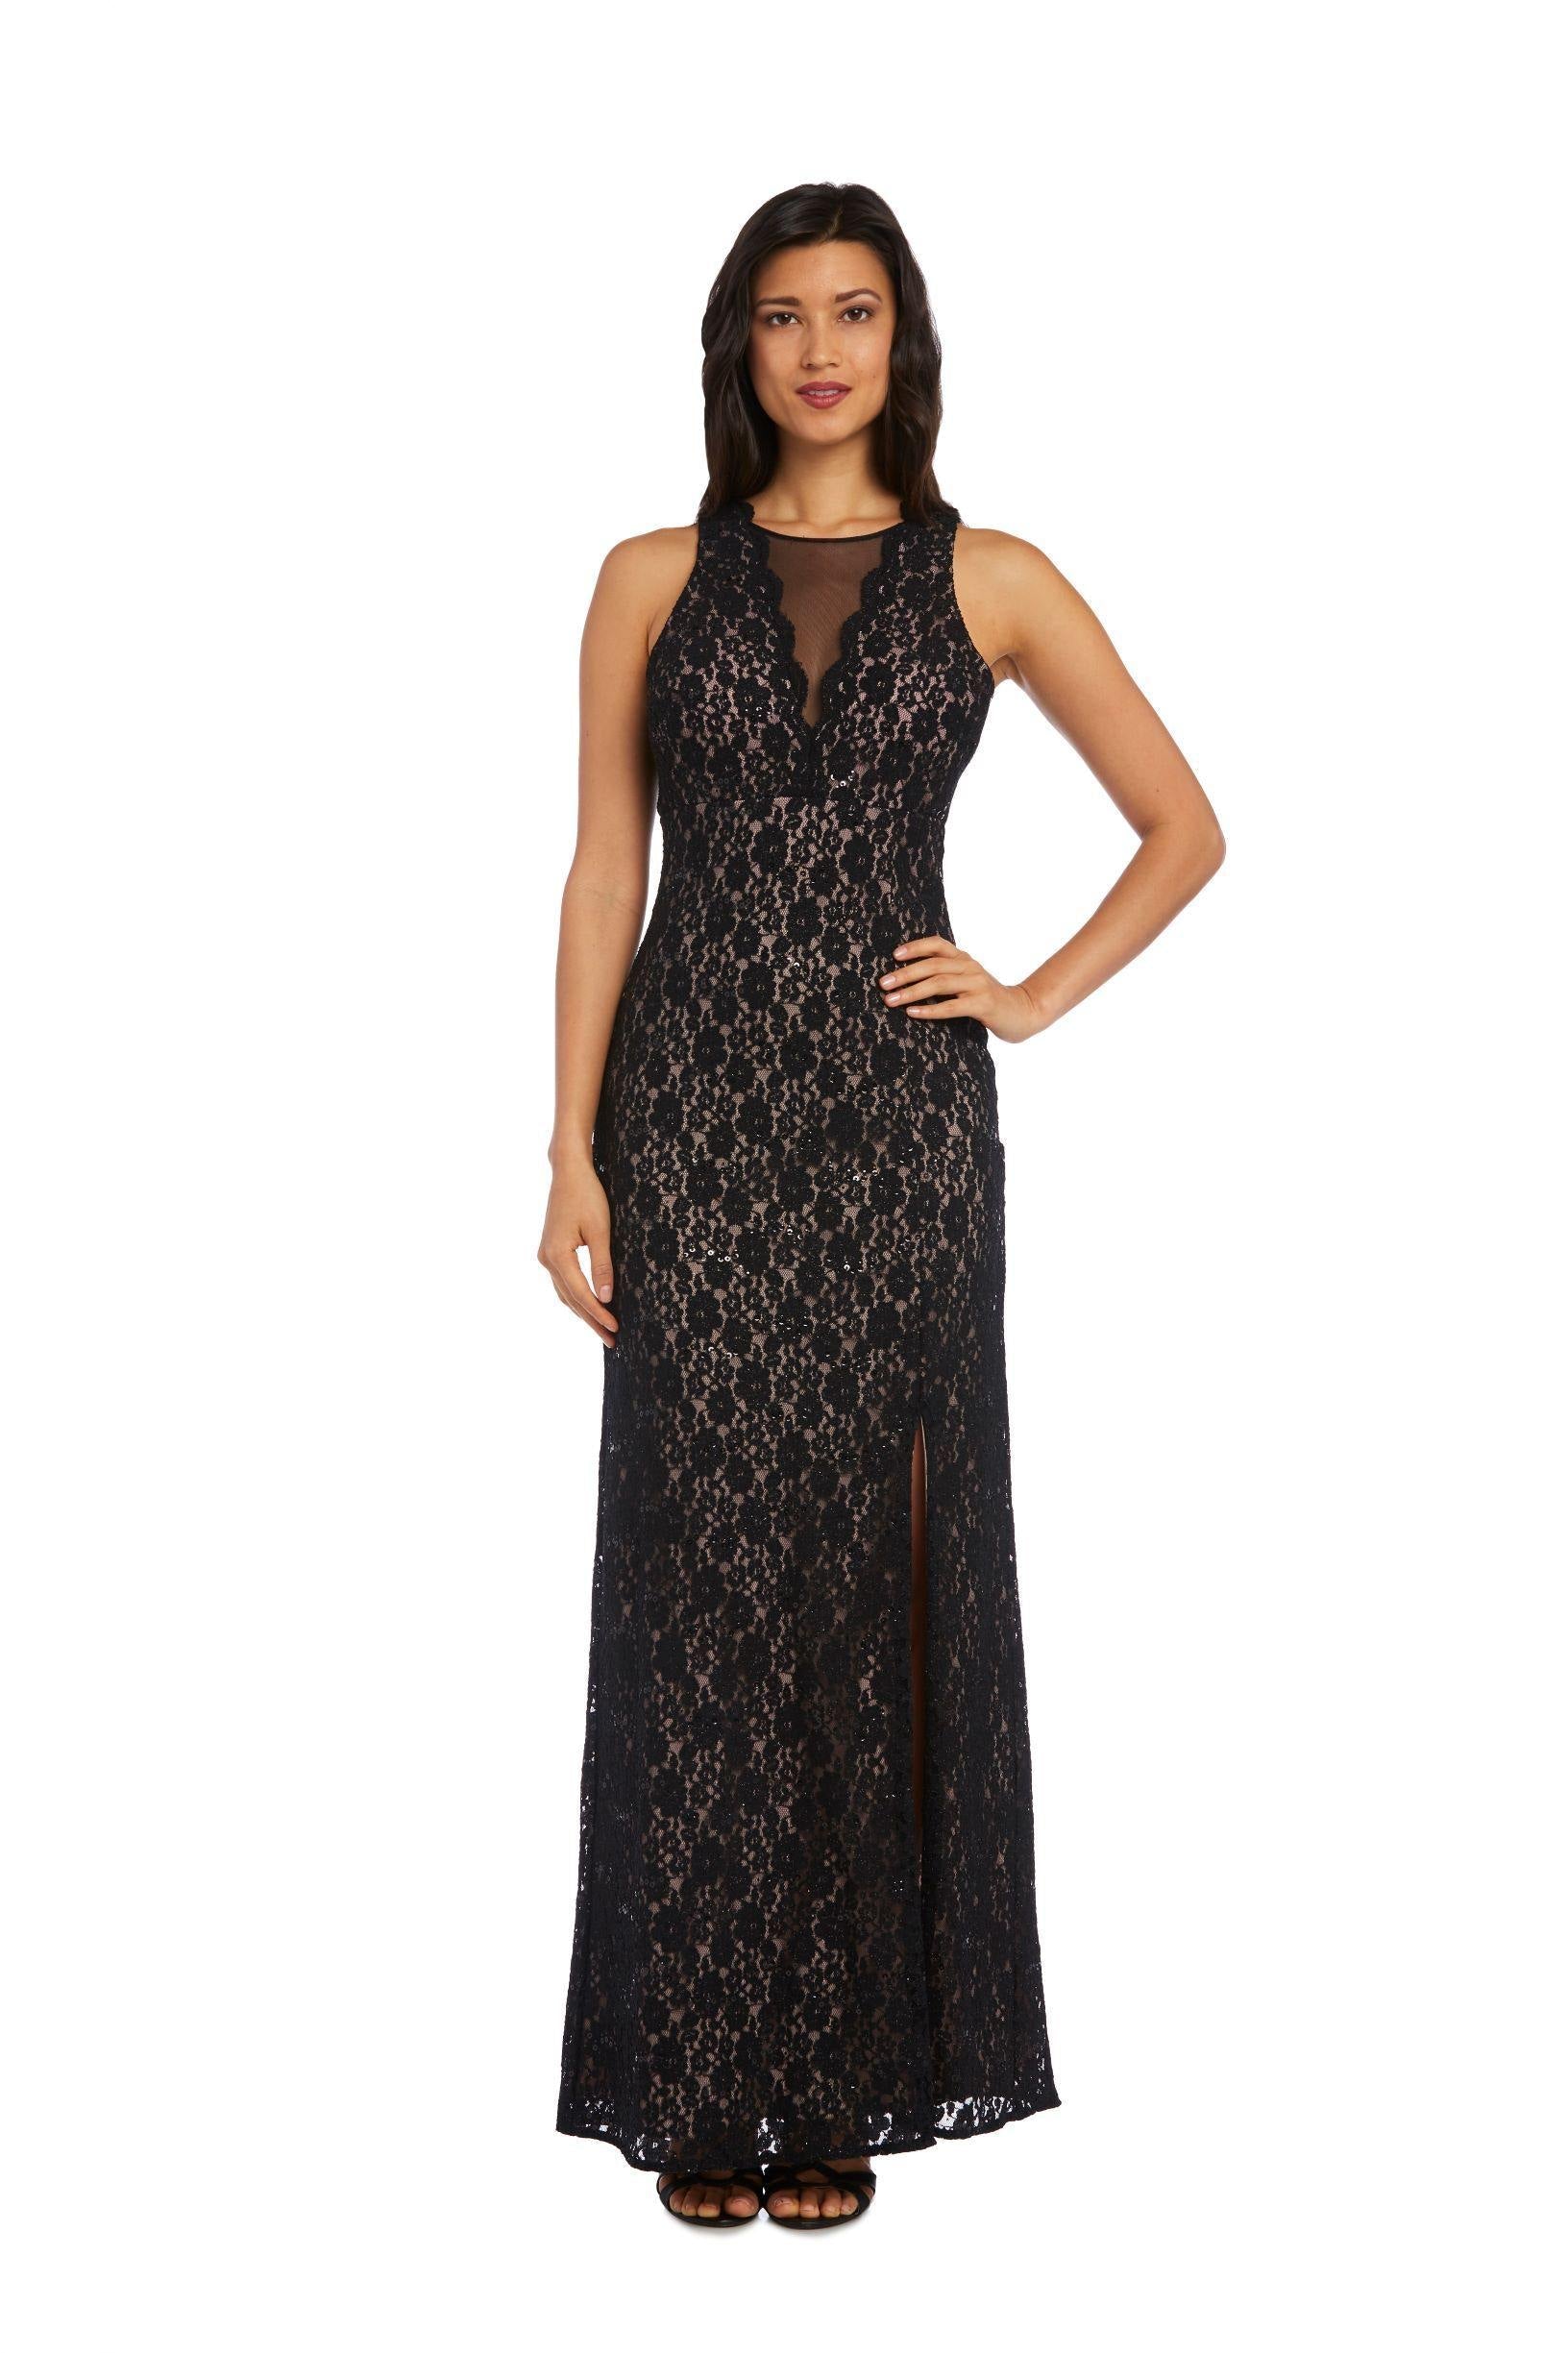 Nightway Long Glitter Formal Dress 21547 - The Dress Outlet